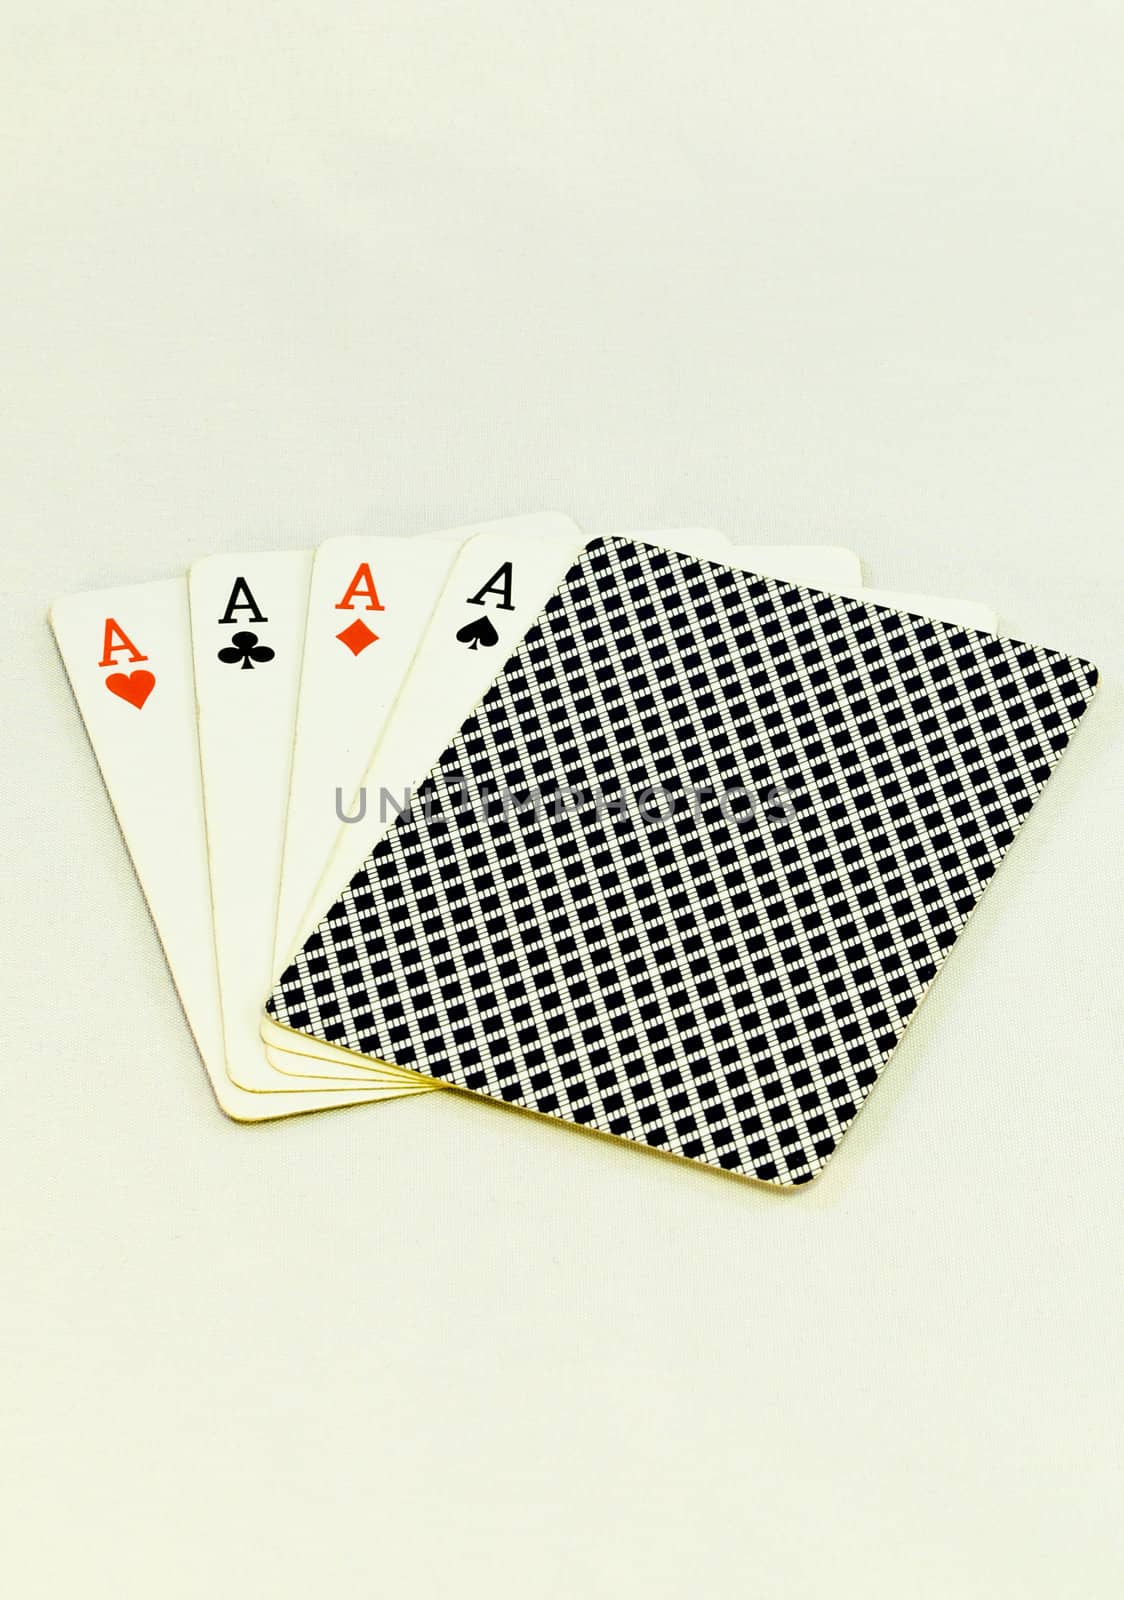 Gambling cards by robertblaga